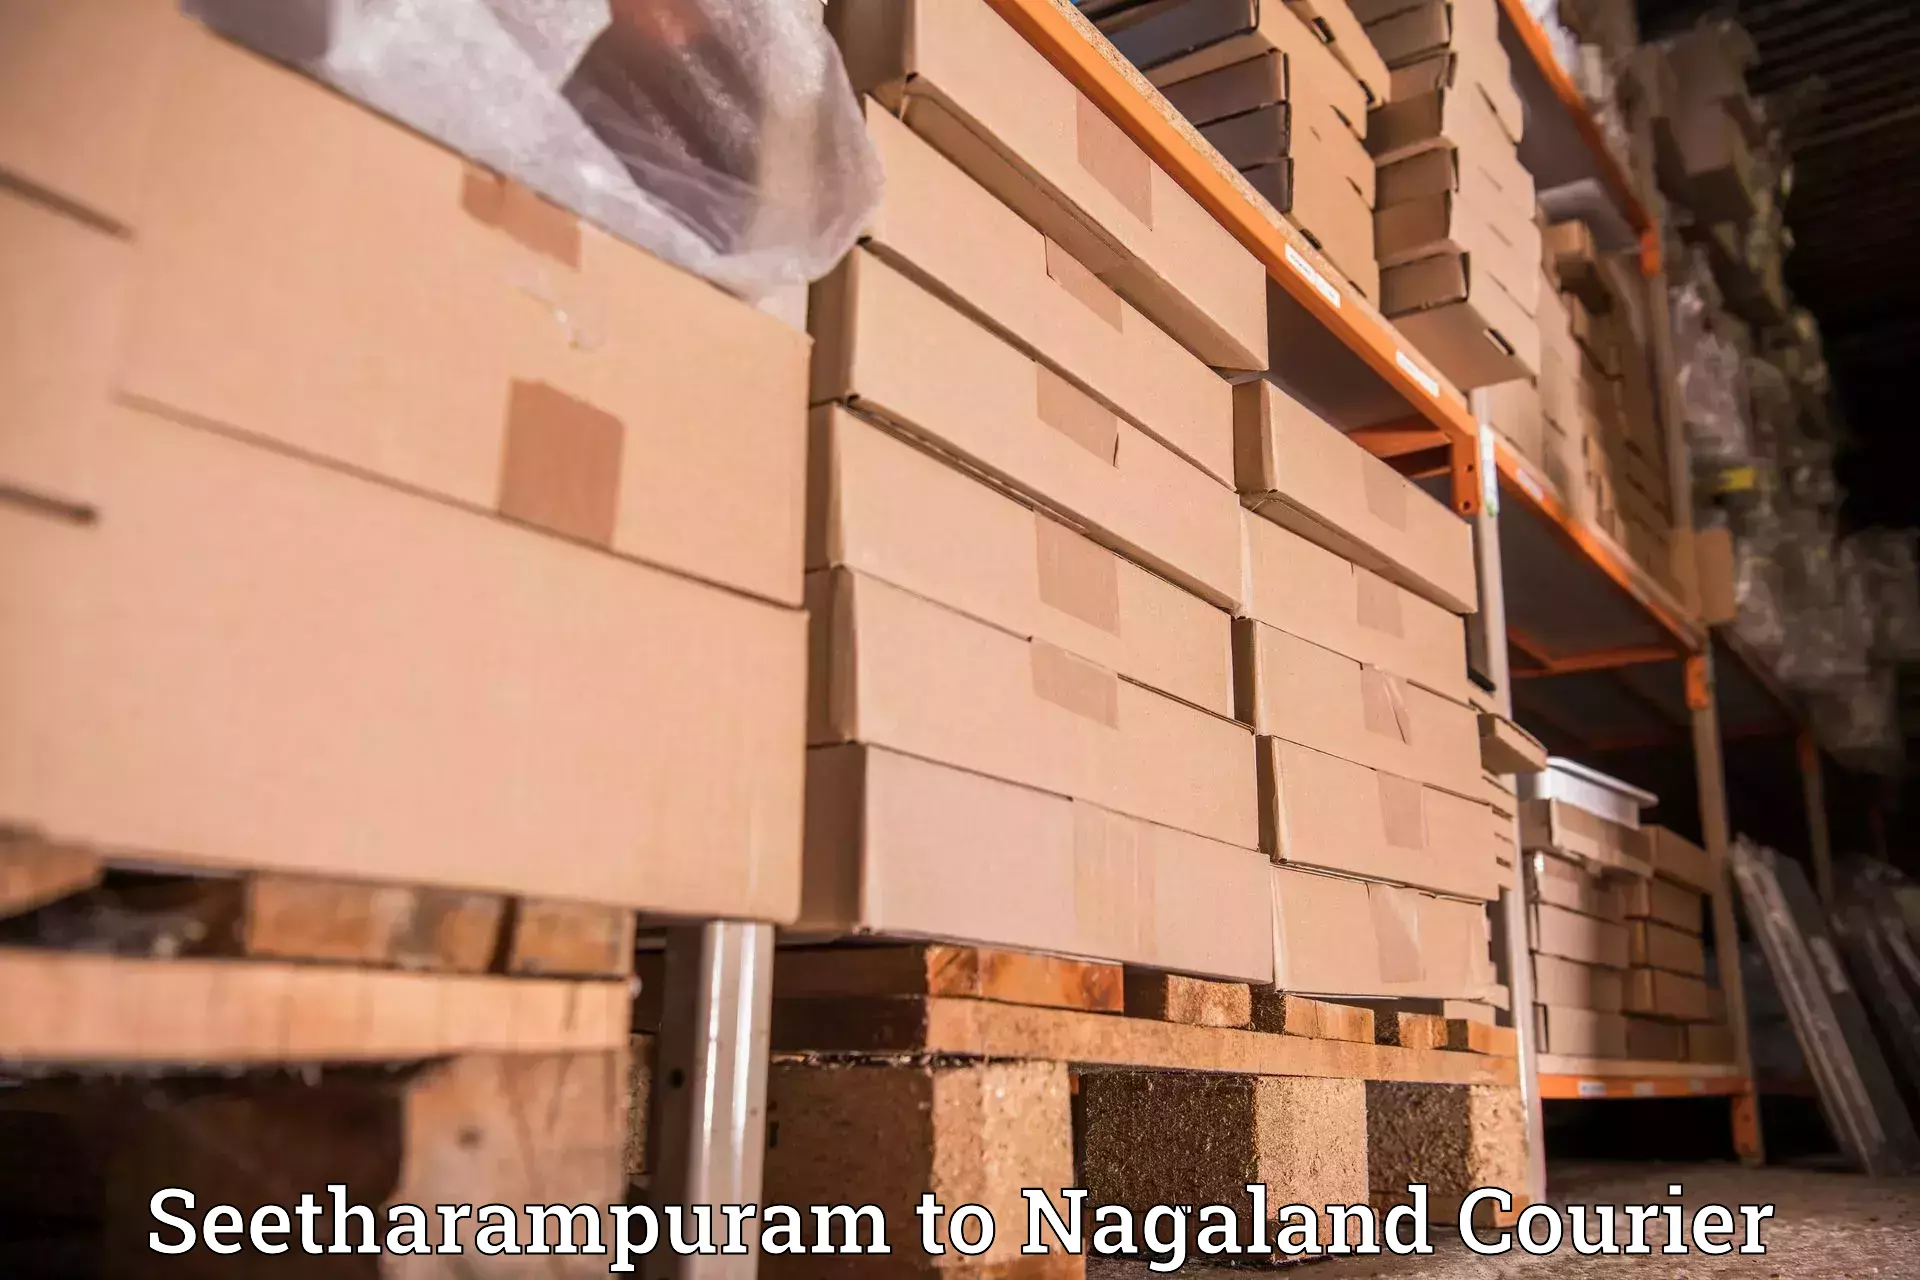 Logistics service provider Seetharampuram to Mon